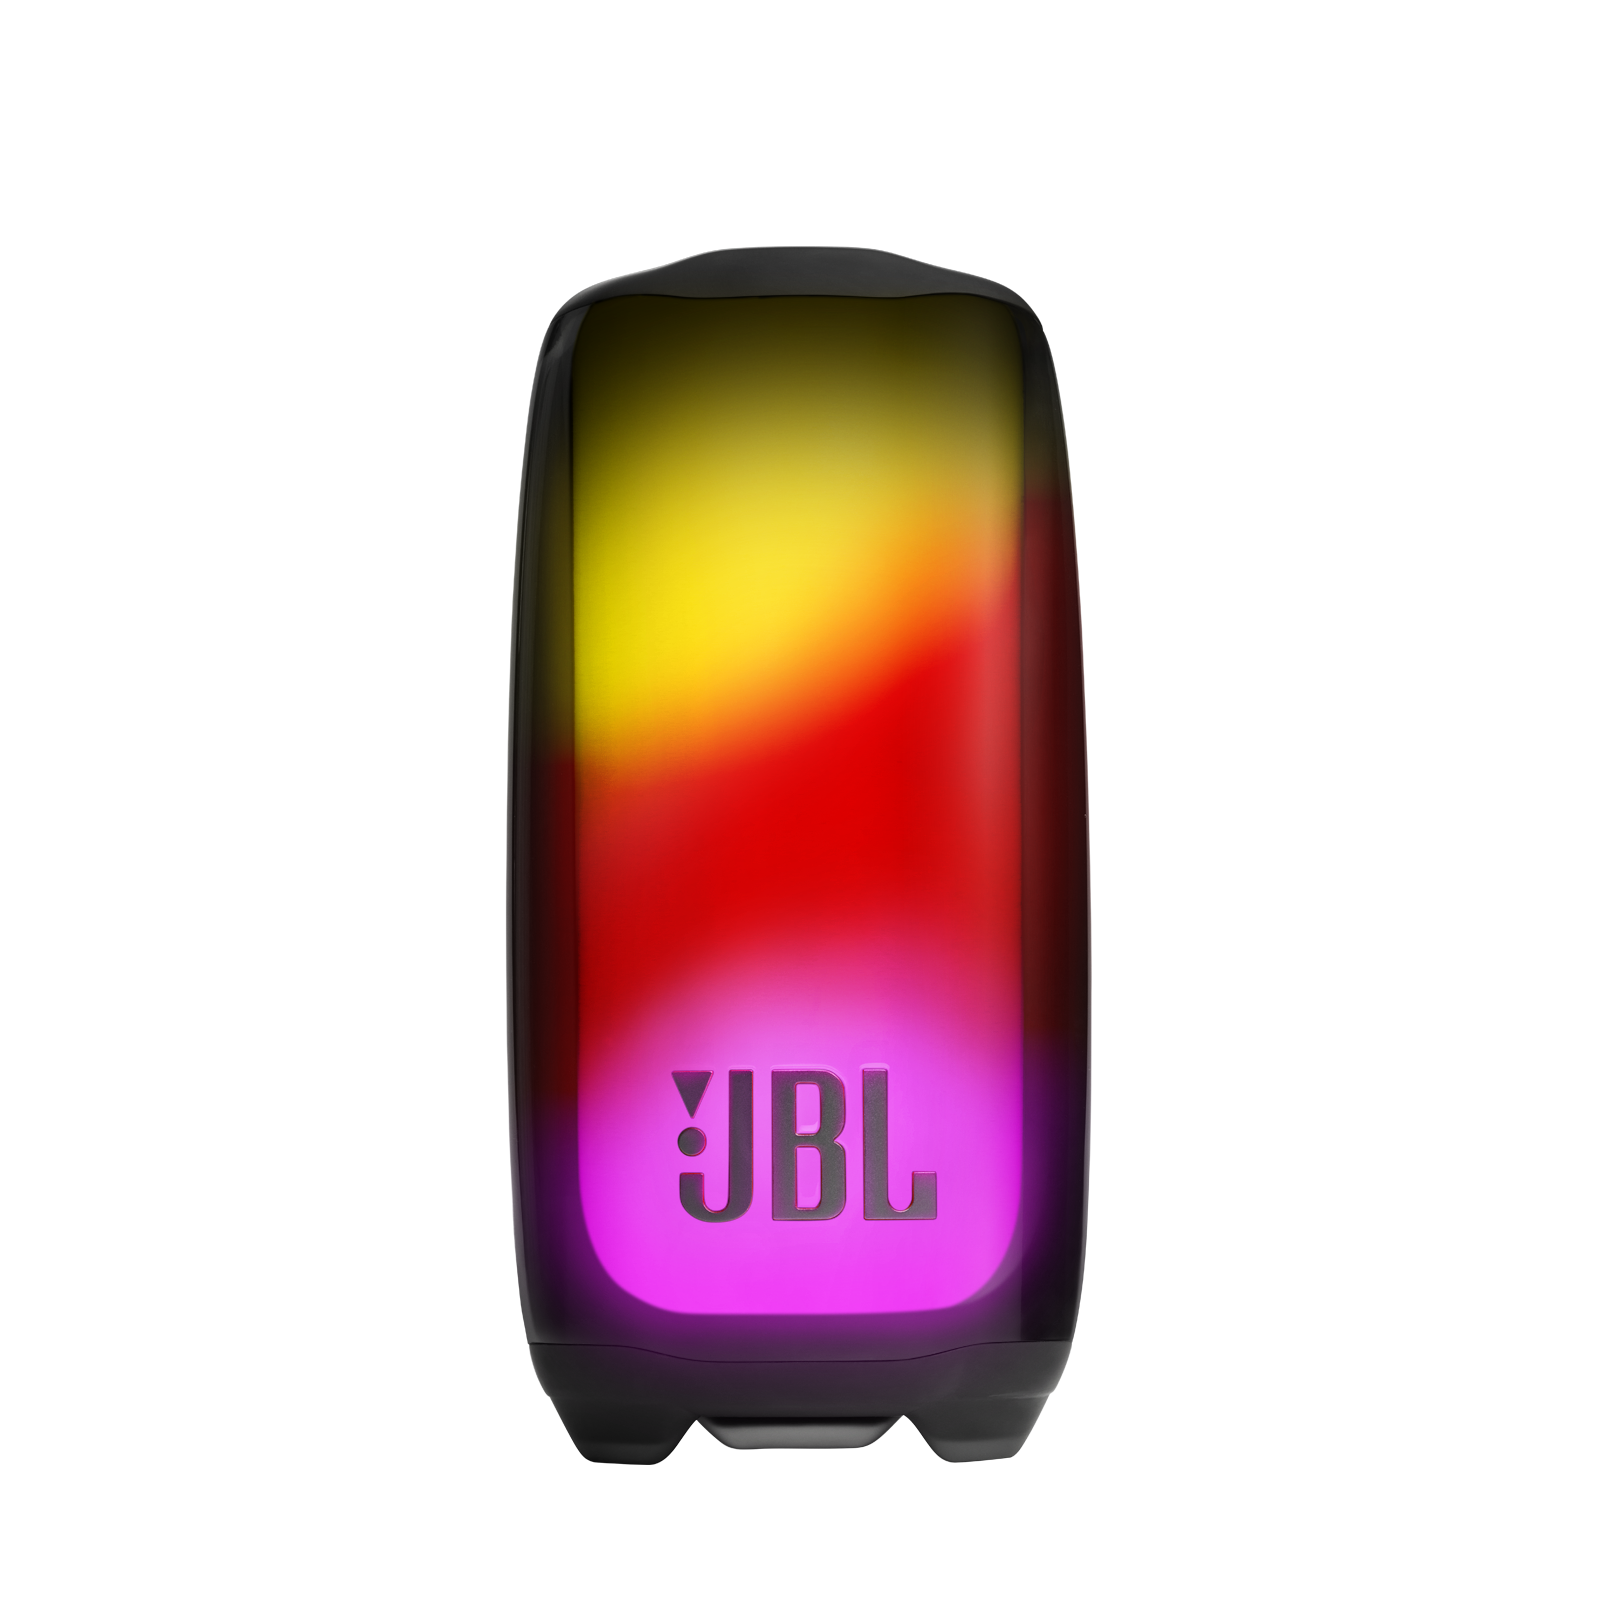 JBL PULSE 5 Bluetoothスピーカー参考Amazon価格32400 - mosaicobilingue.com.br